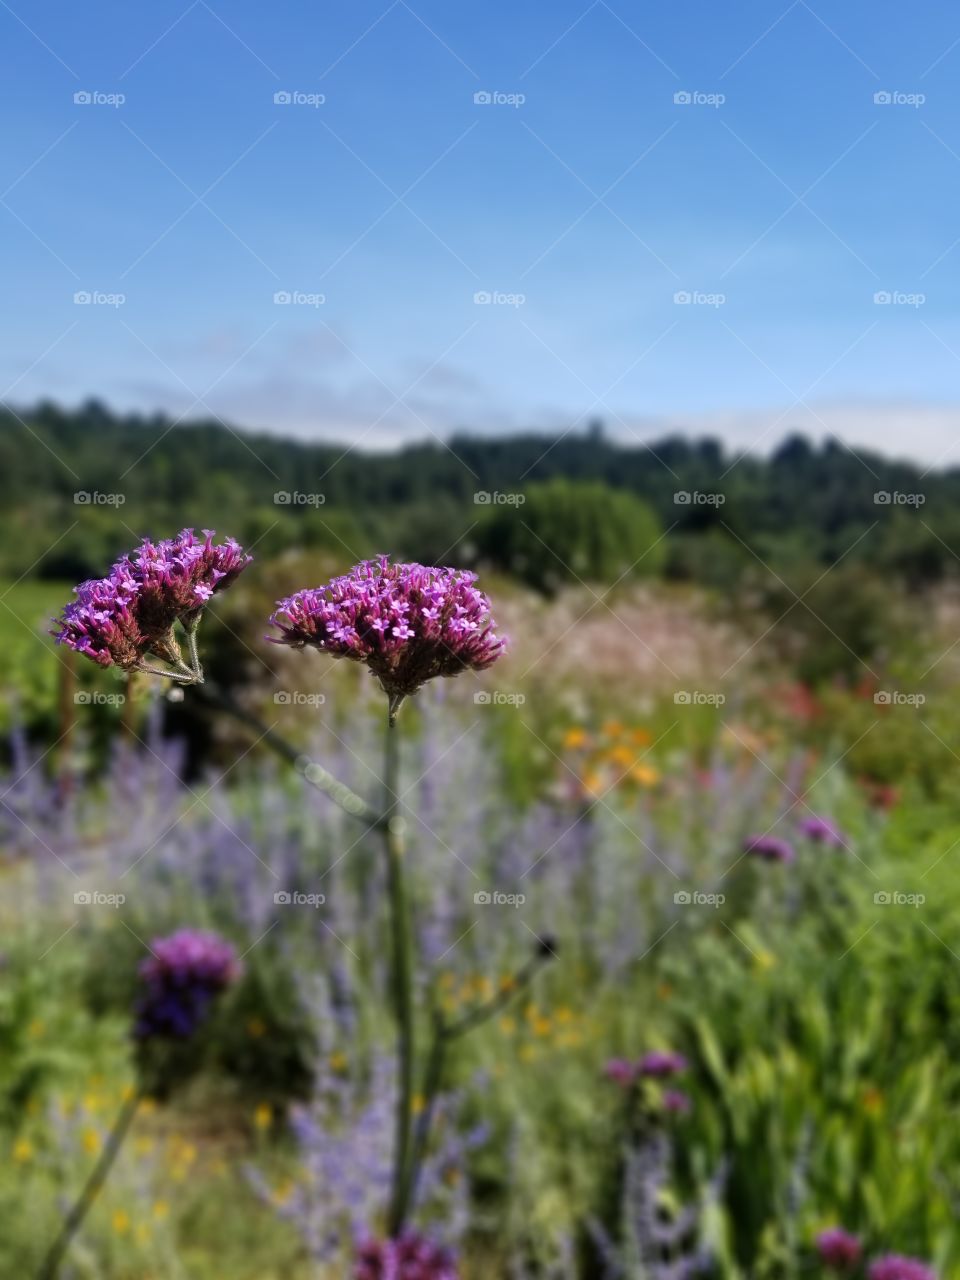 Flowers on the vineyard